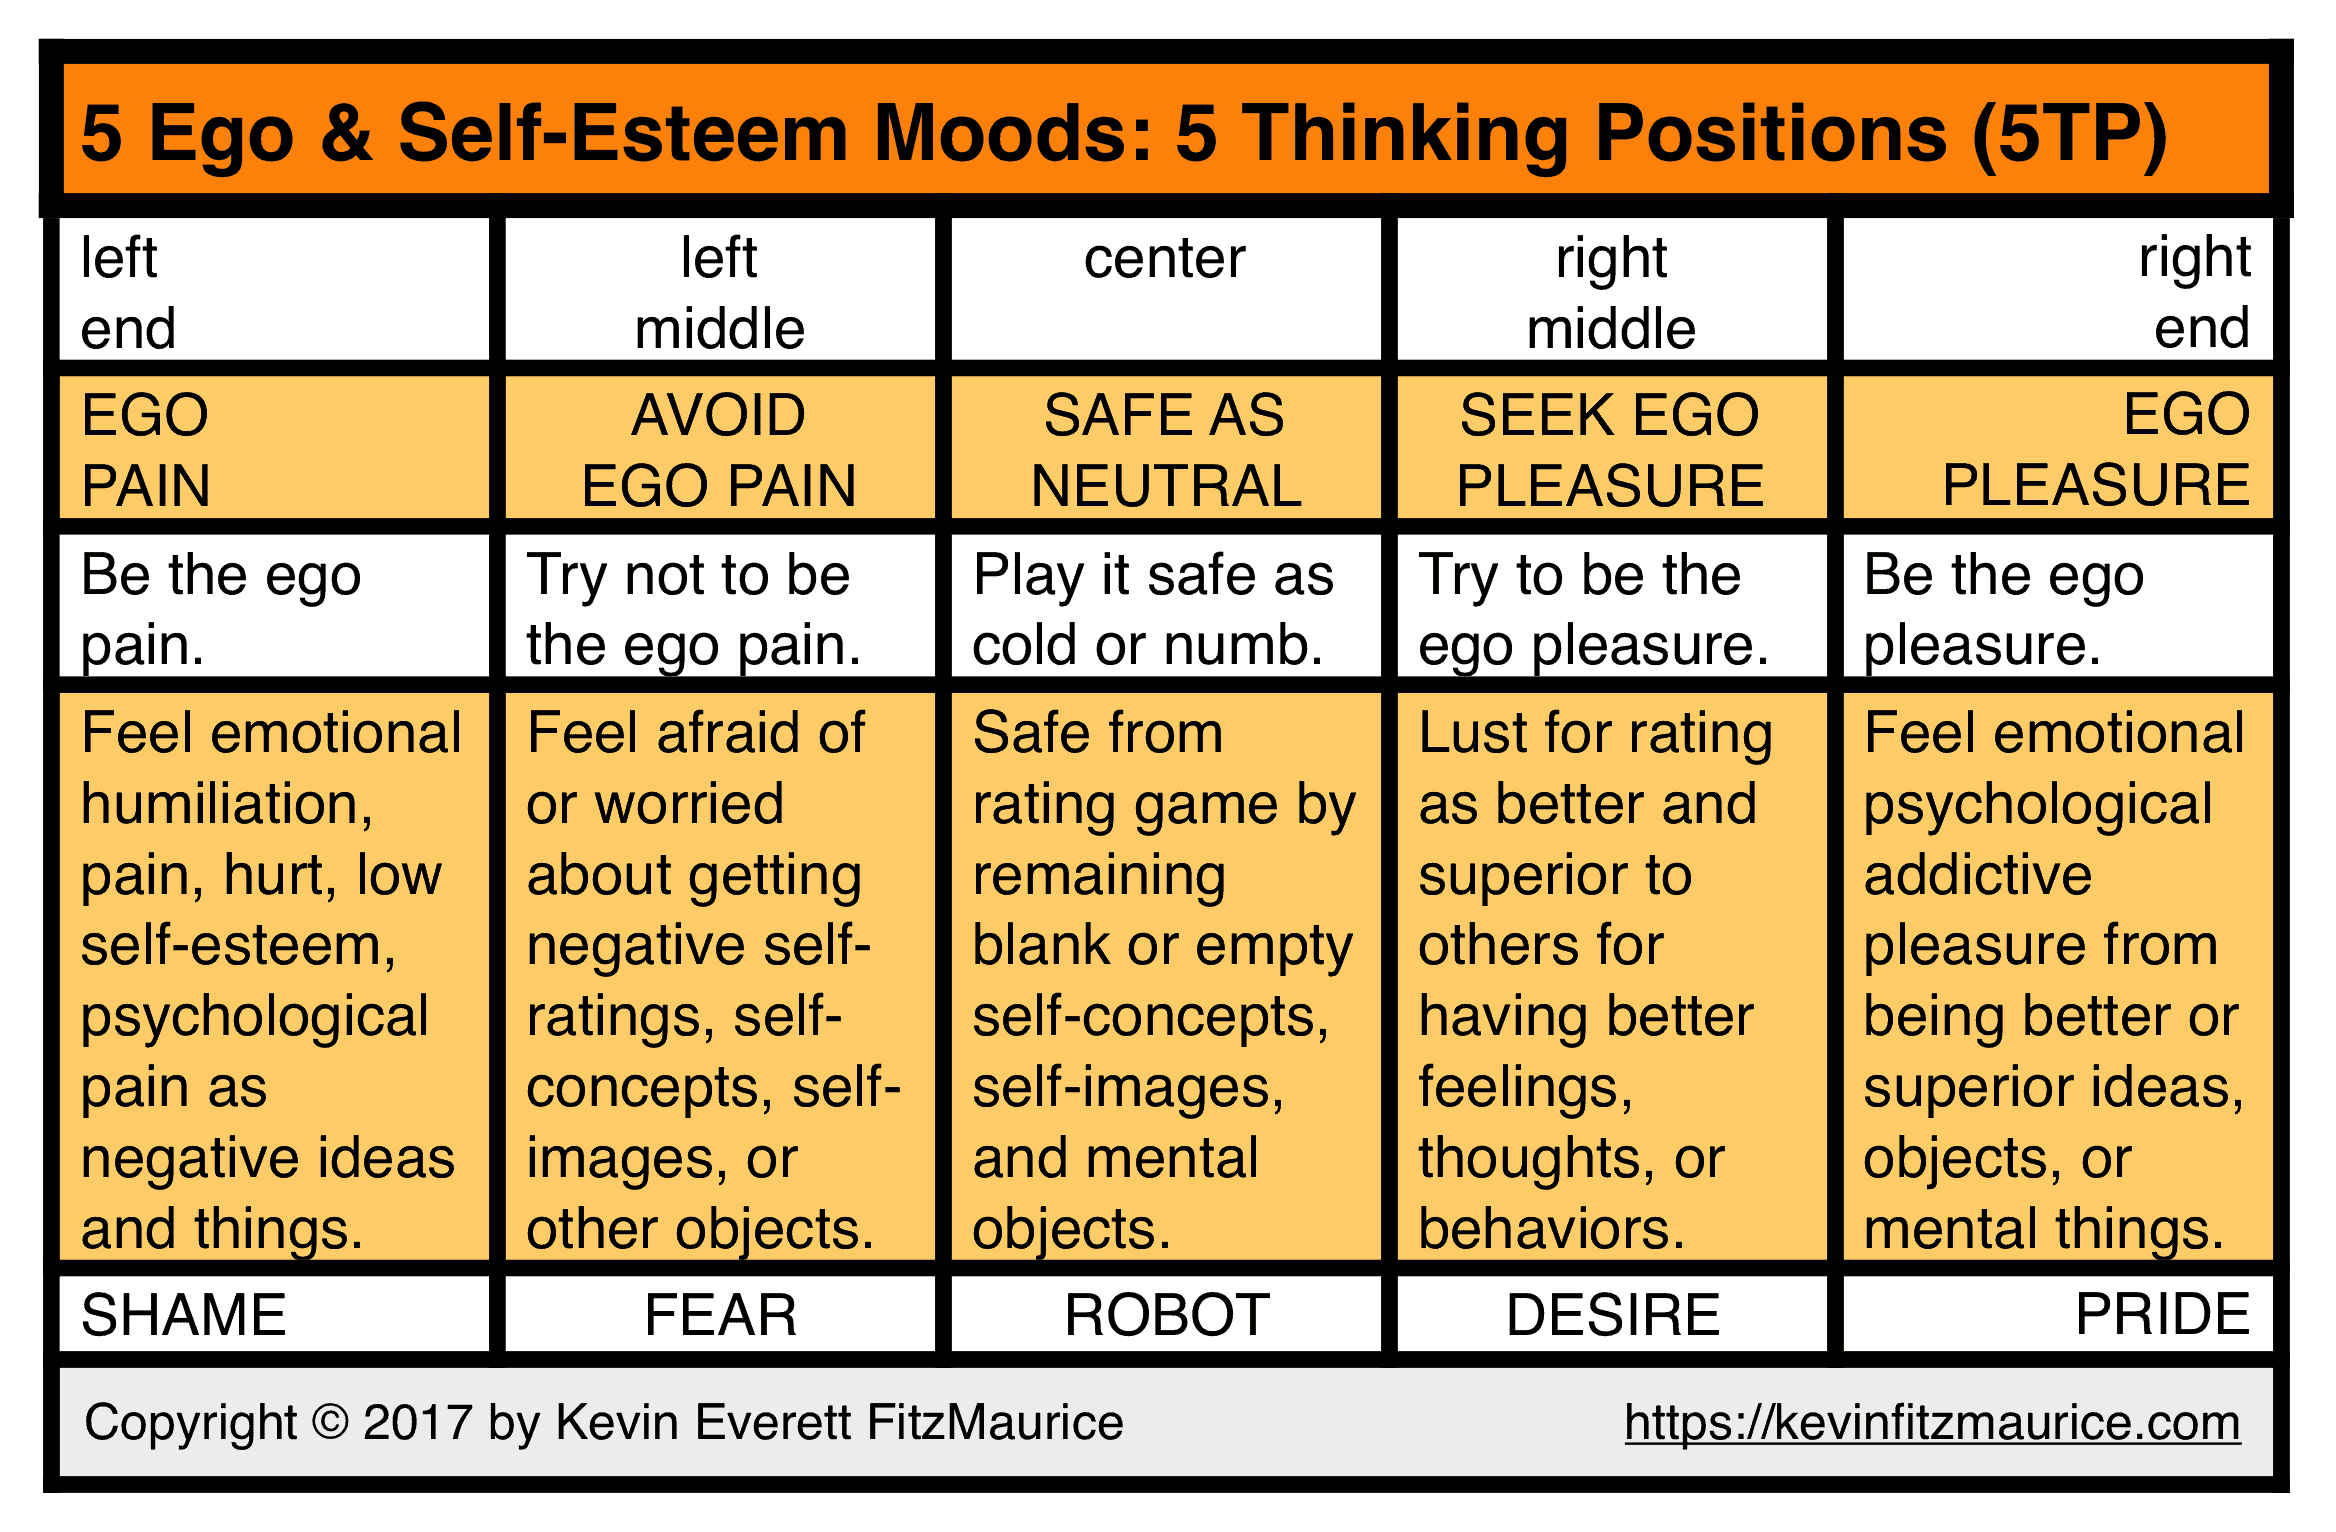 5TP & 5 Ego Moods